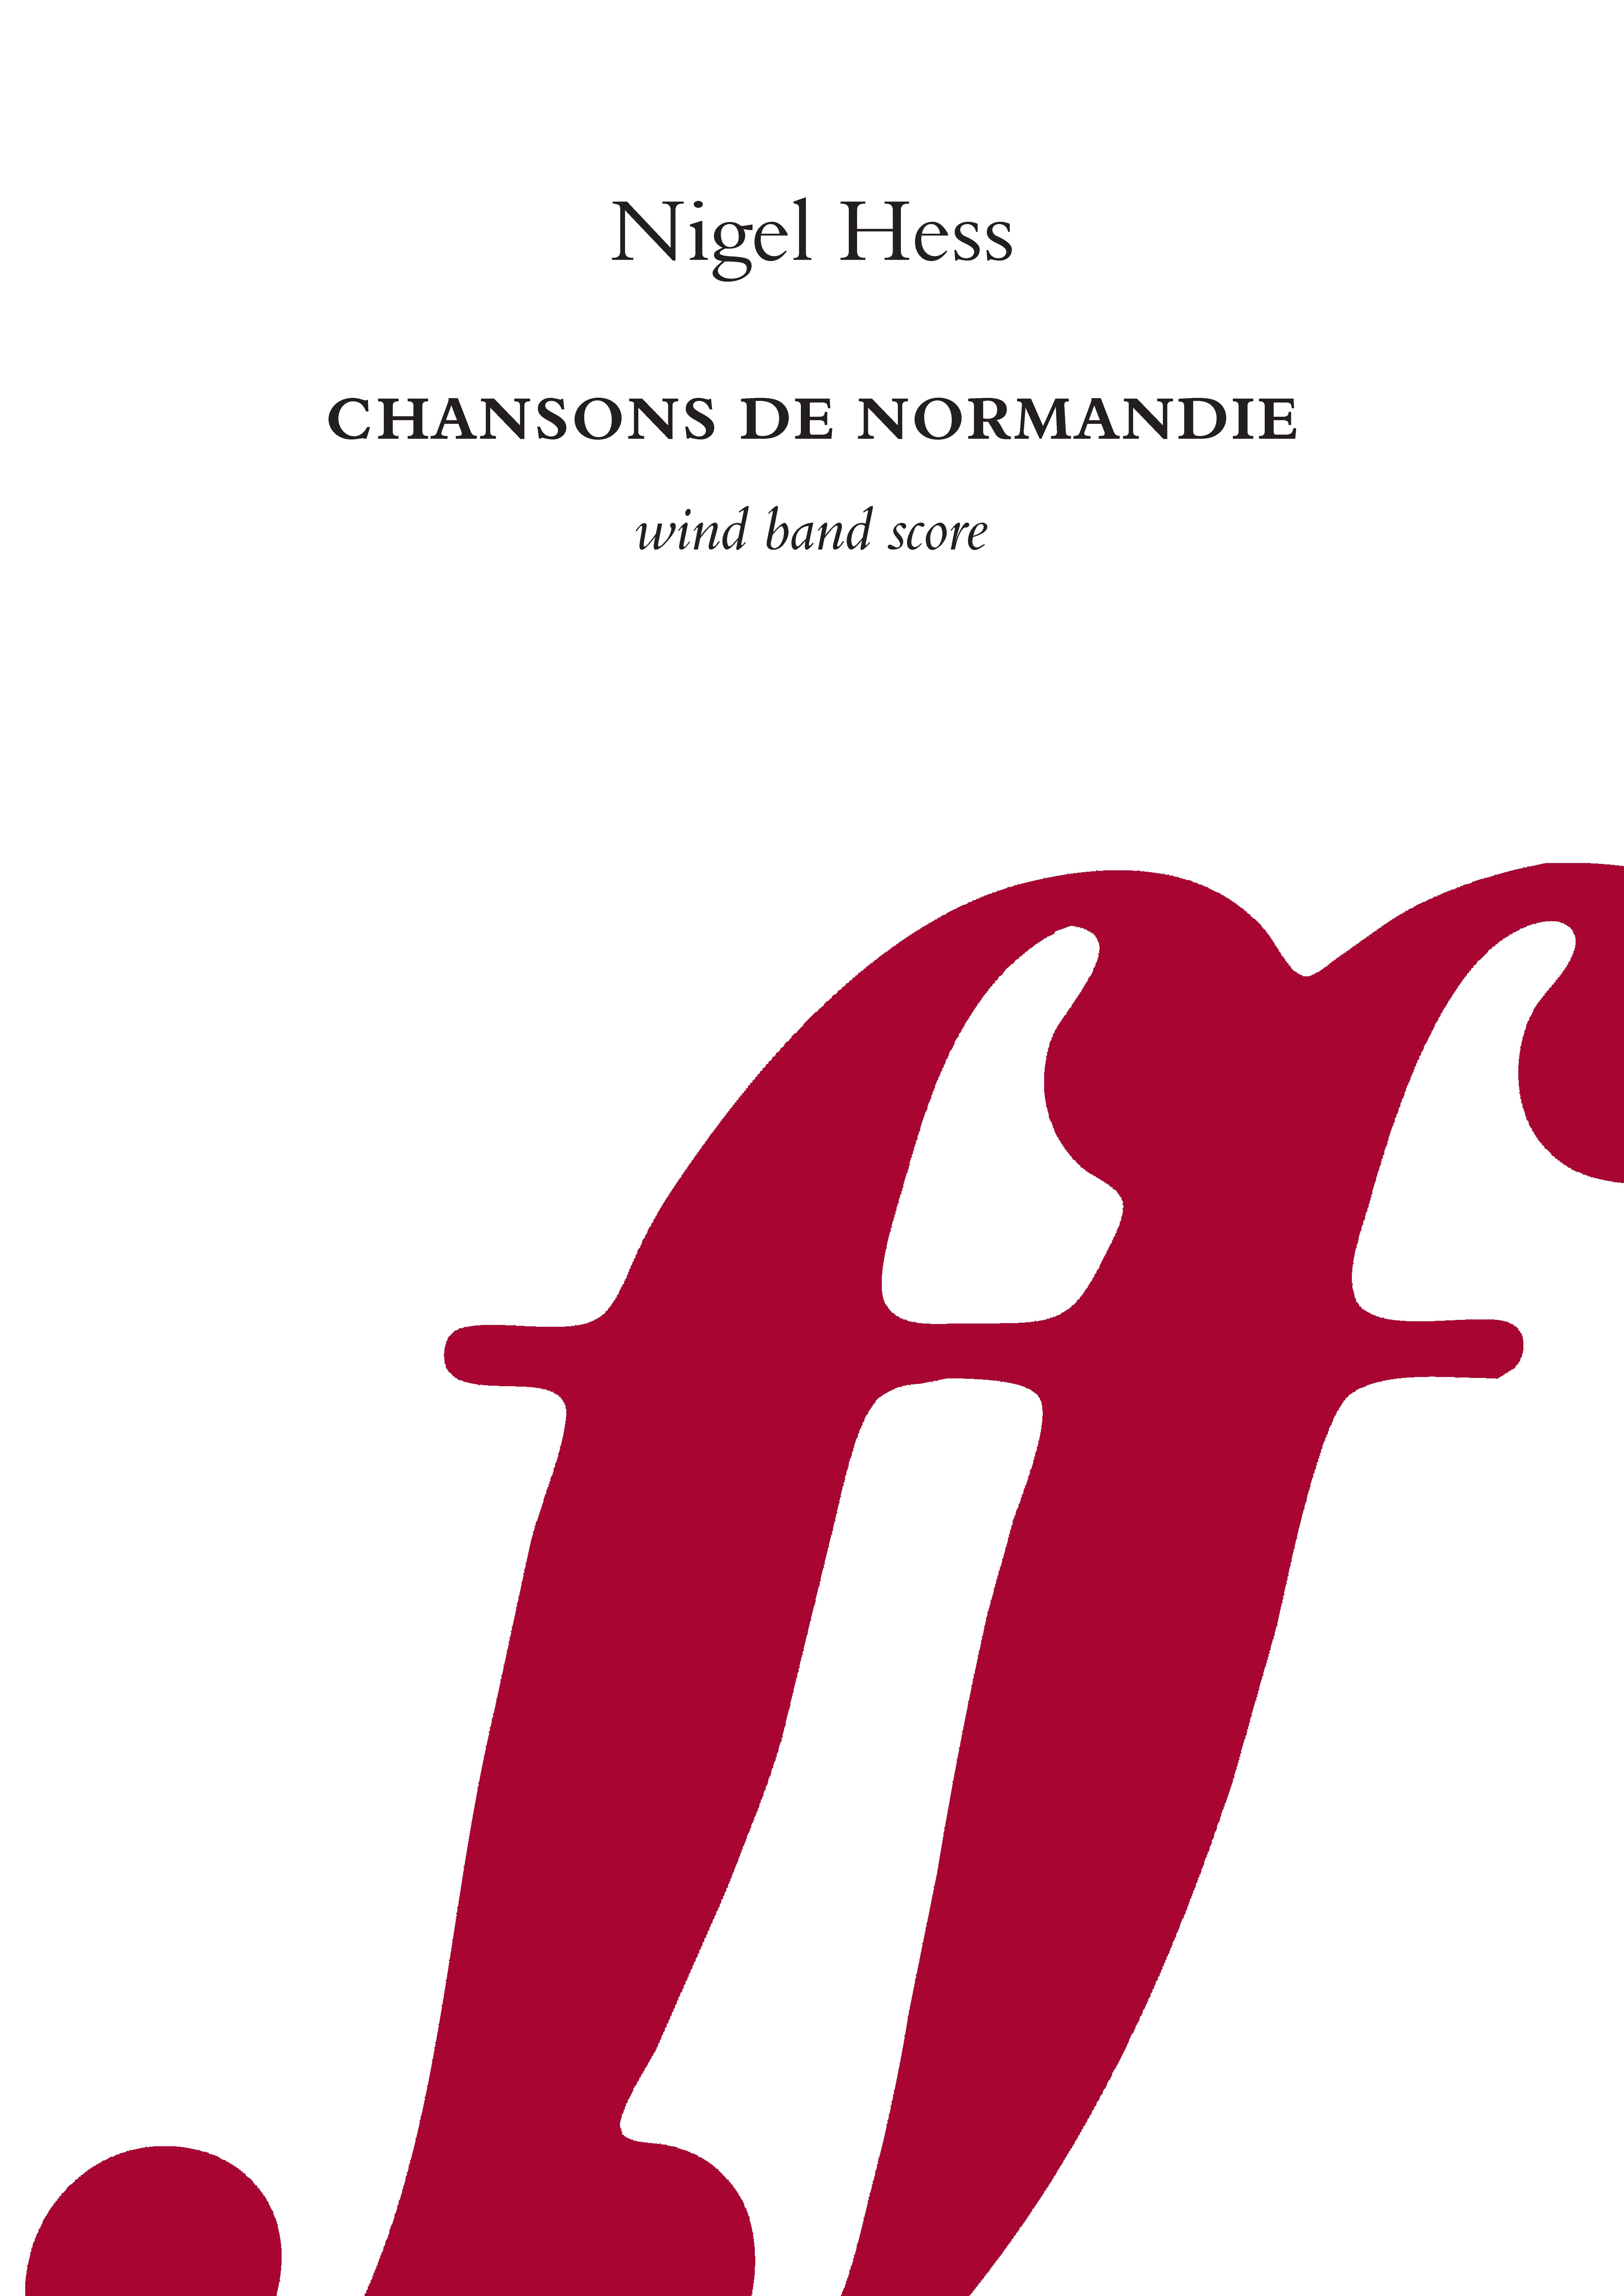 Chansons De Normandie (Wind Band Score) (HESS NIGEL)